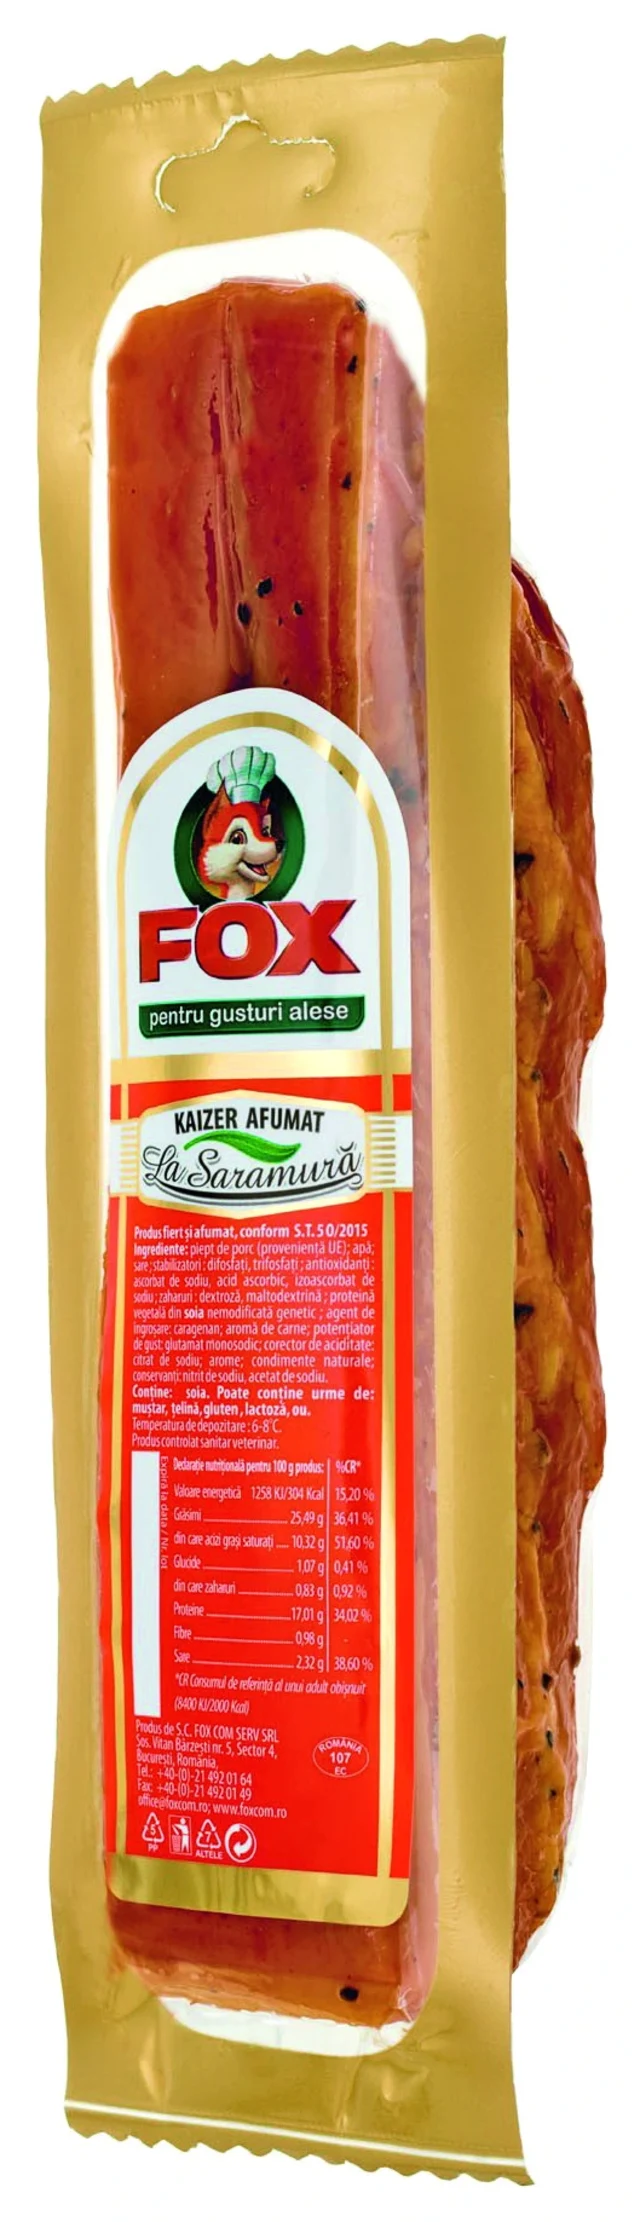 Kaizer la saramura, FOX